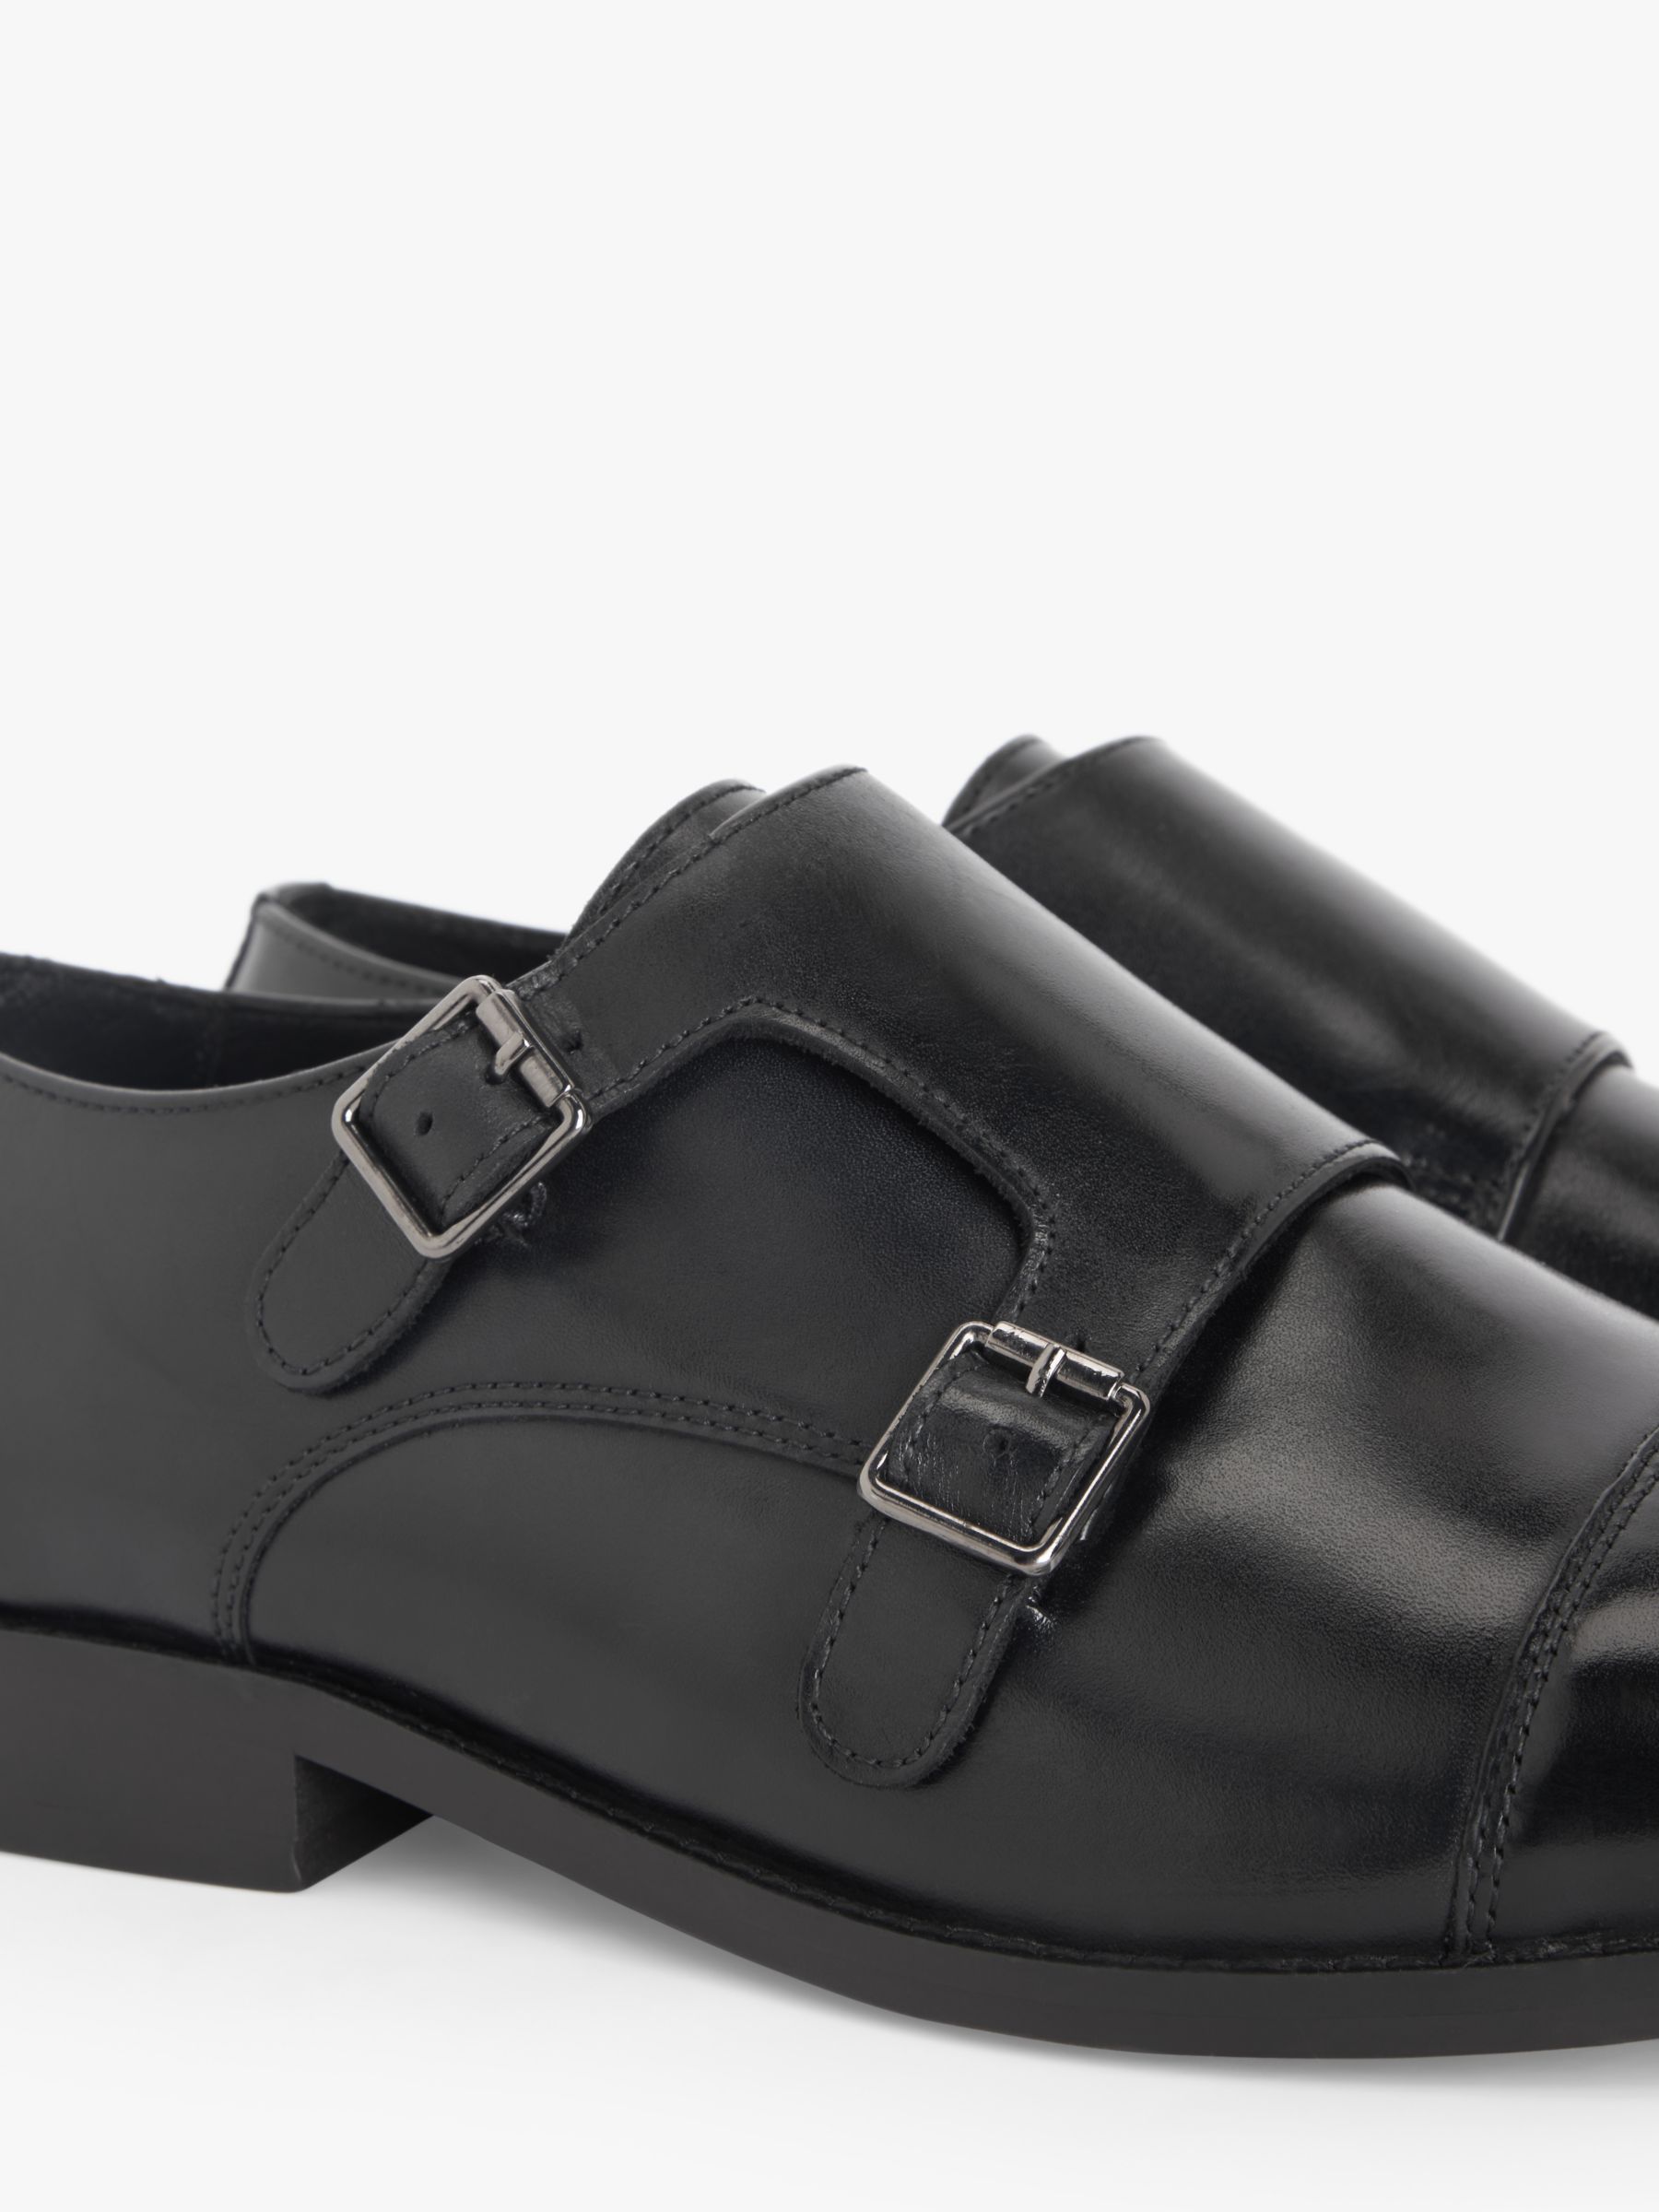 John Lewis Double Strap Leather Monk Shoes, Black, 9